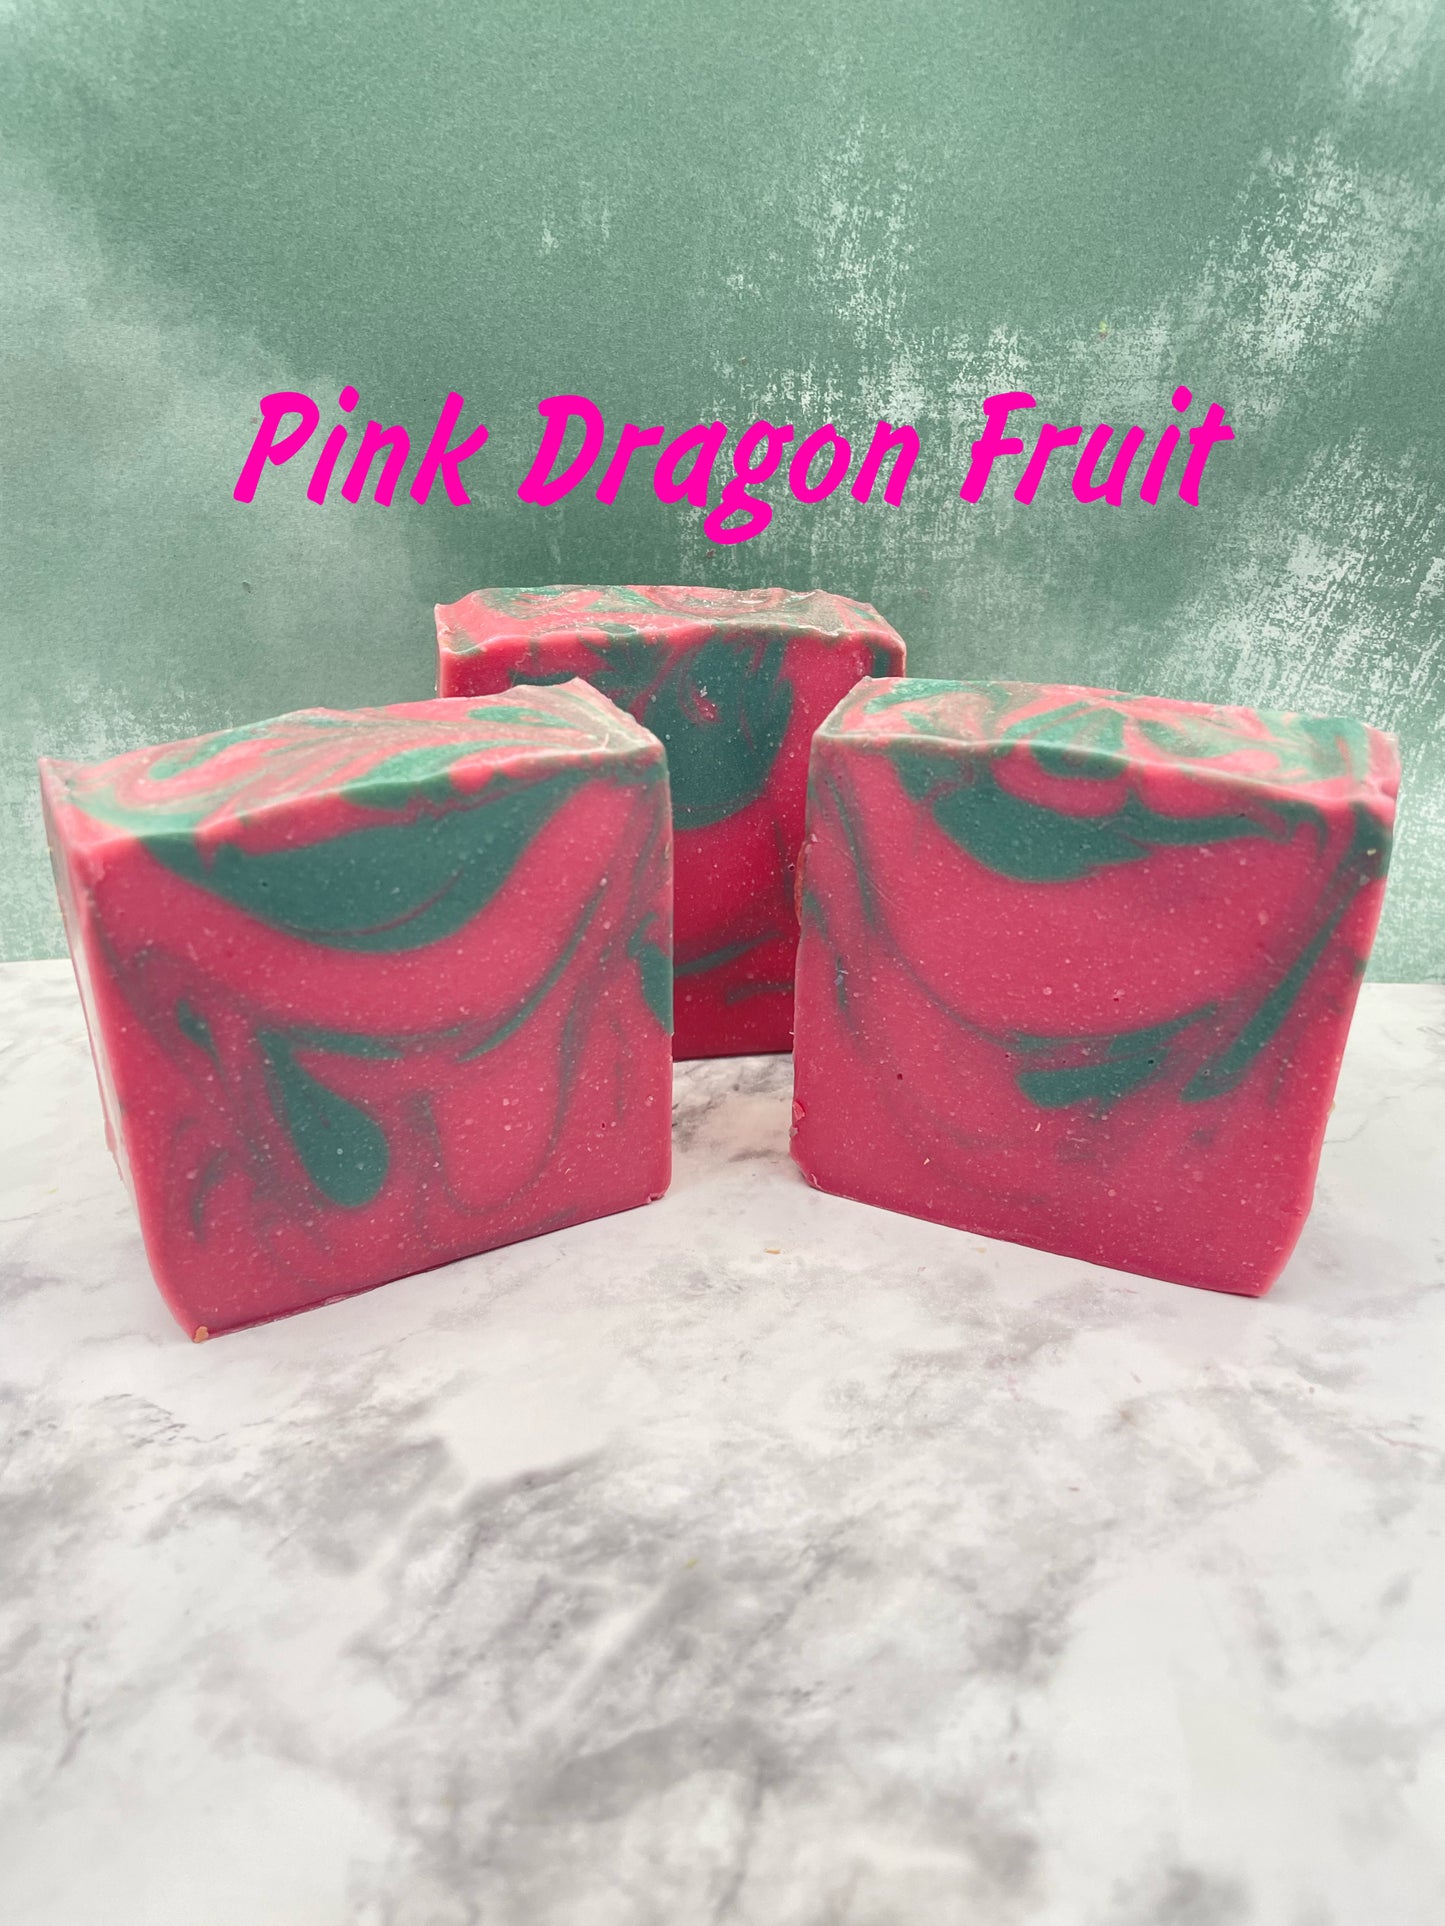 Pink Dragonfruit